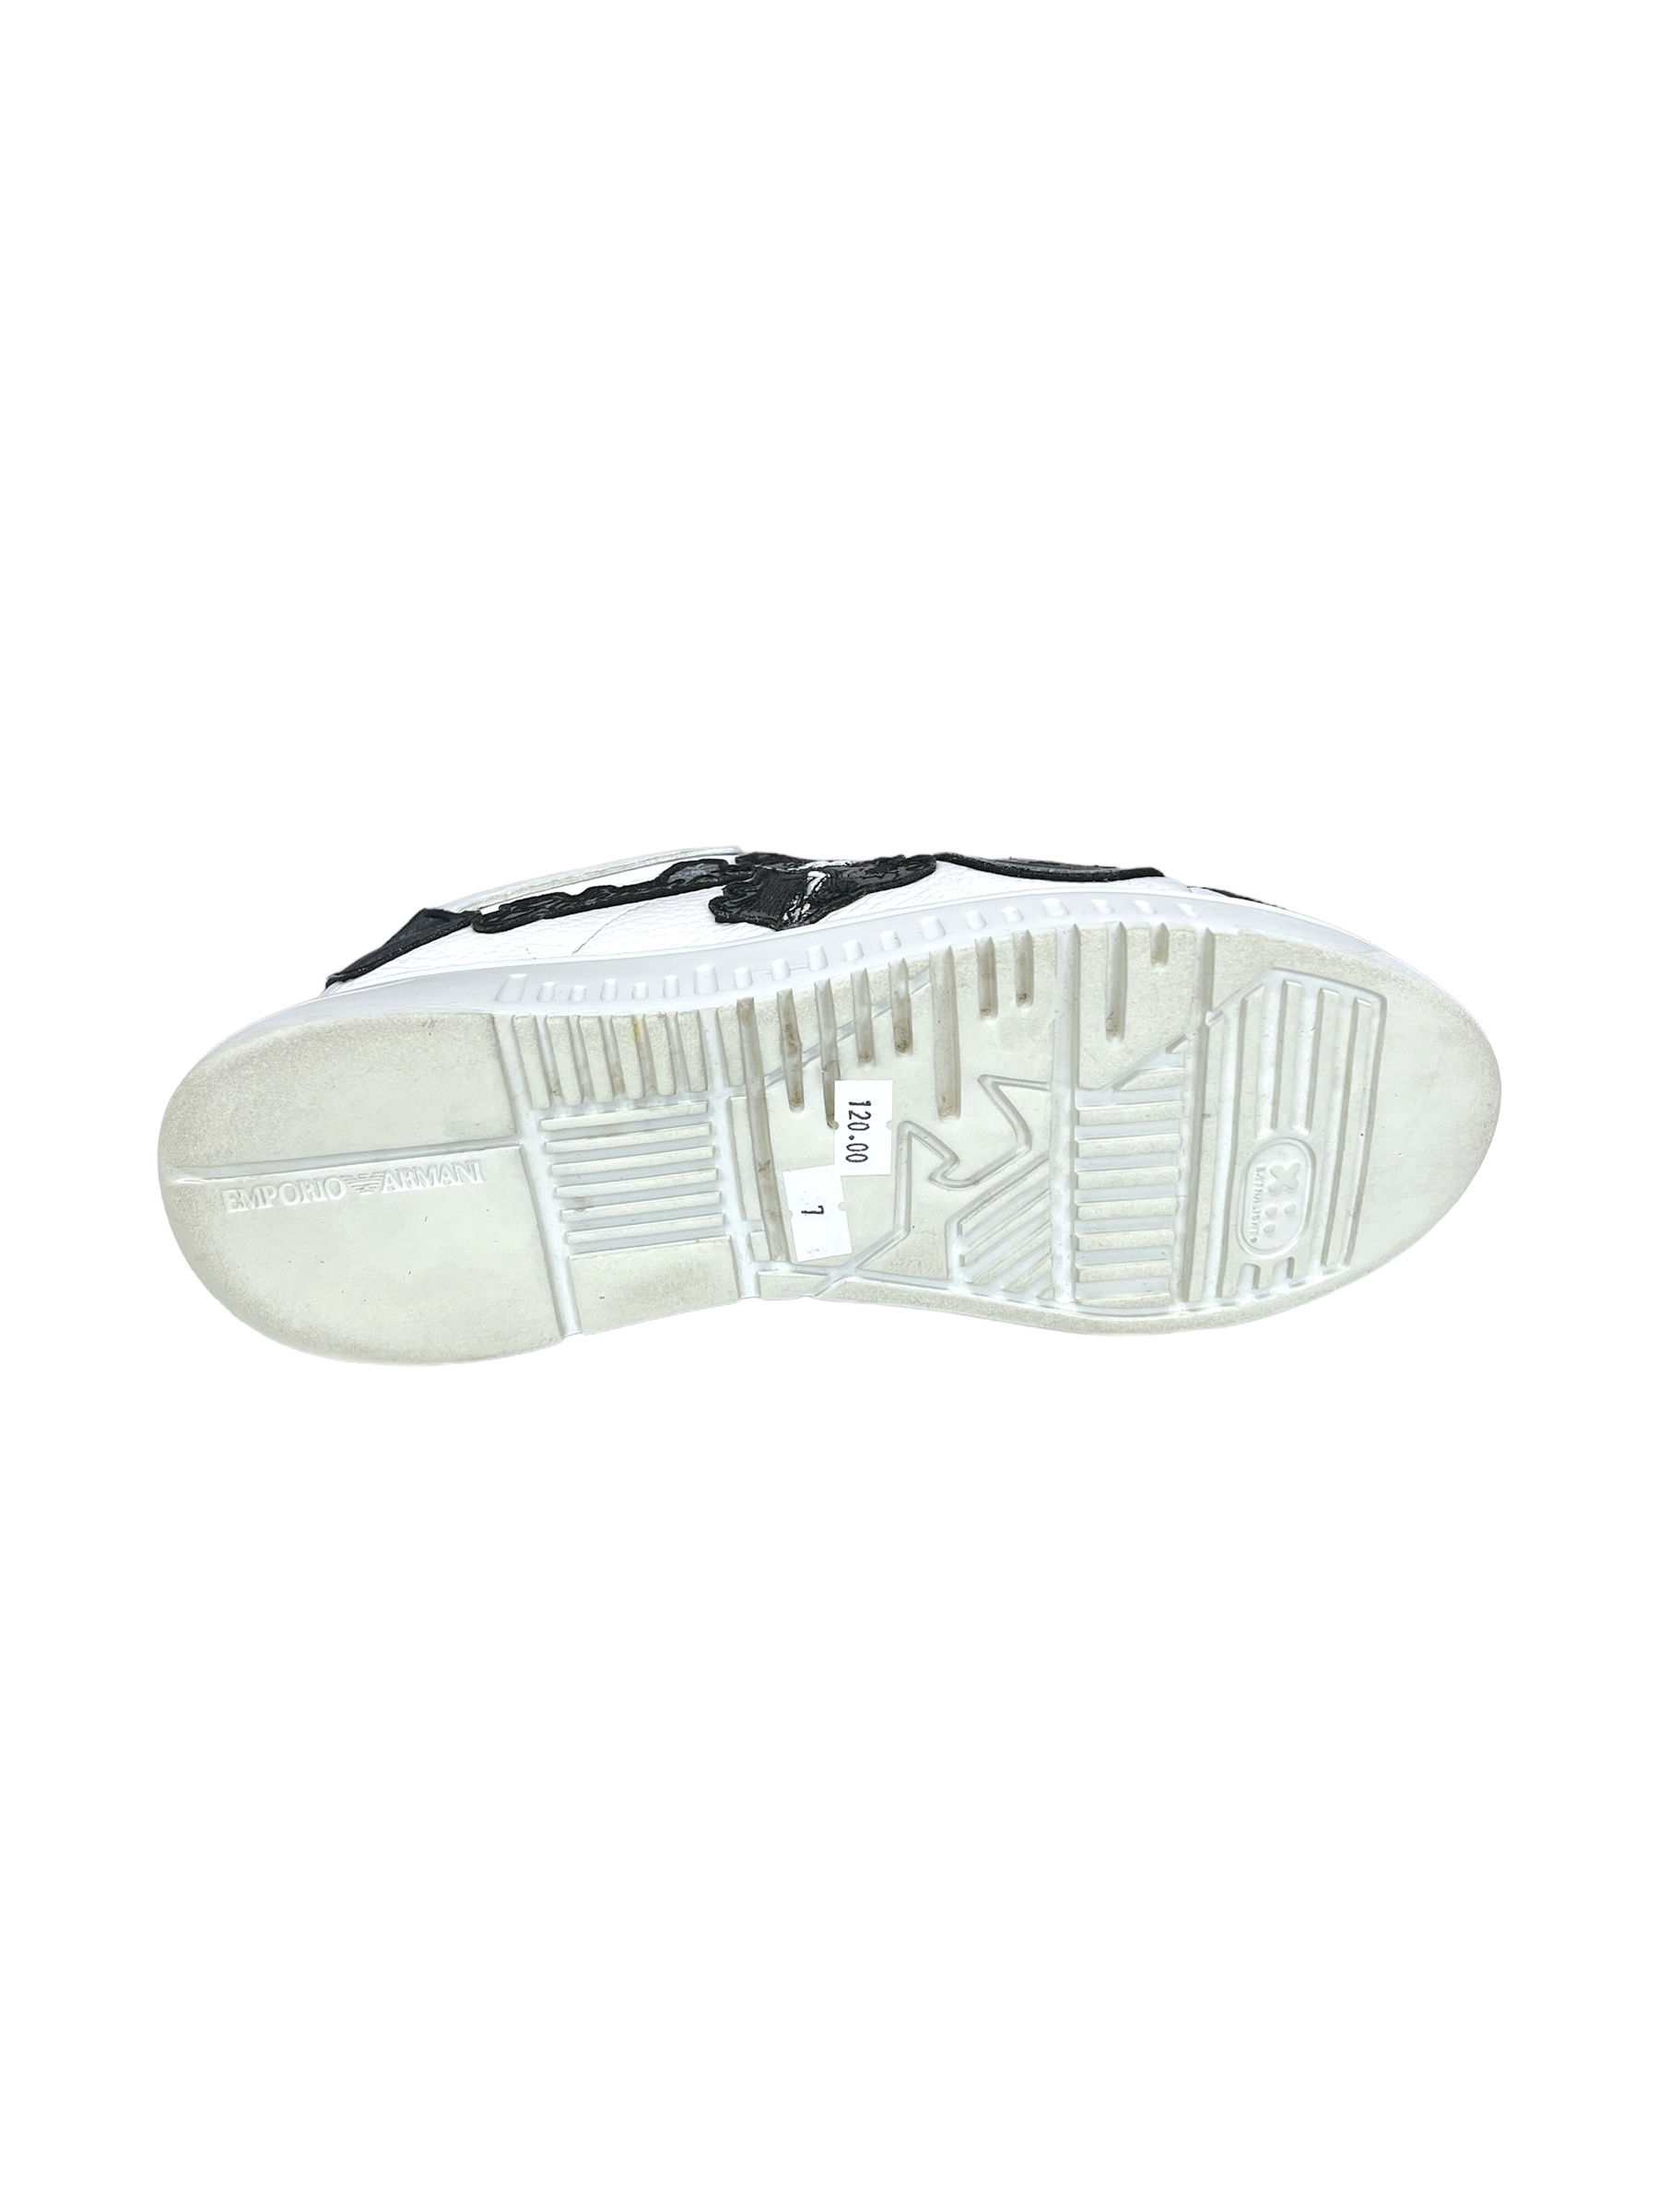 Armani casual running shoes | Classics white | Casual running shoes,  Sneakers men fashion, Walking shoes women